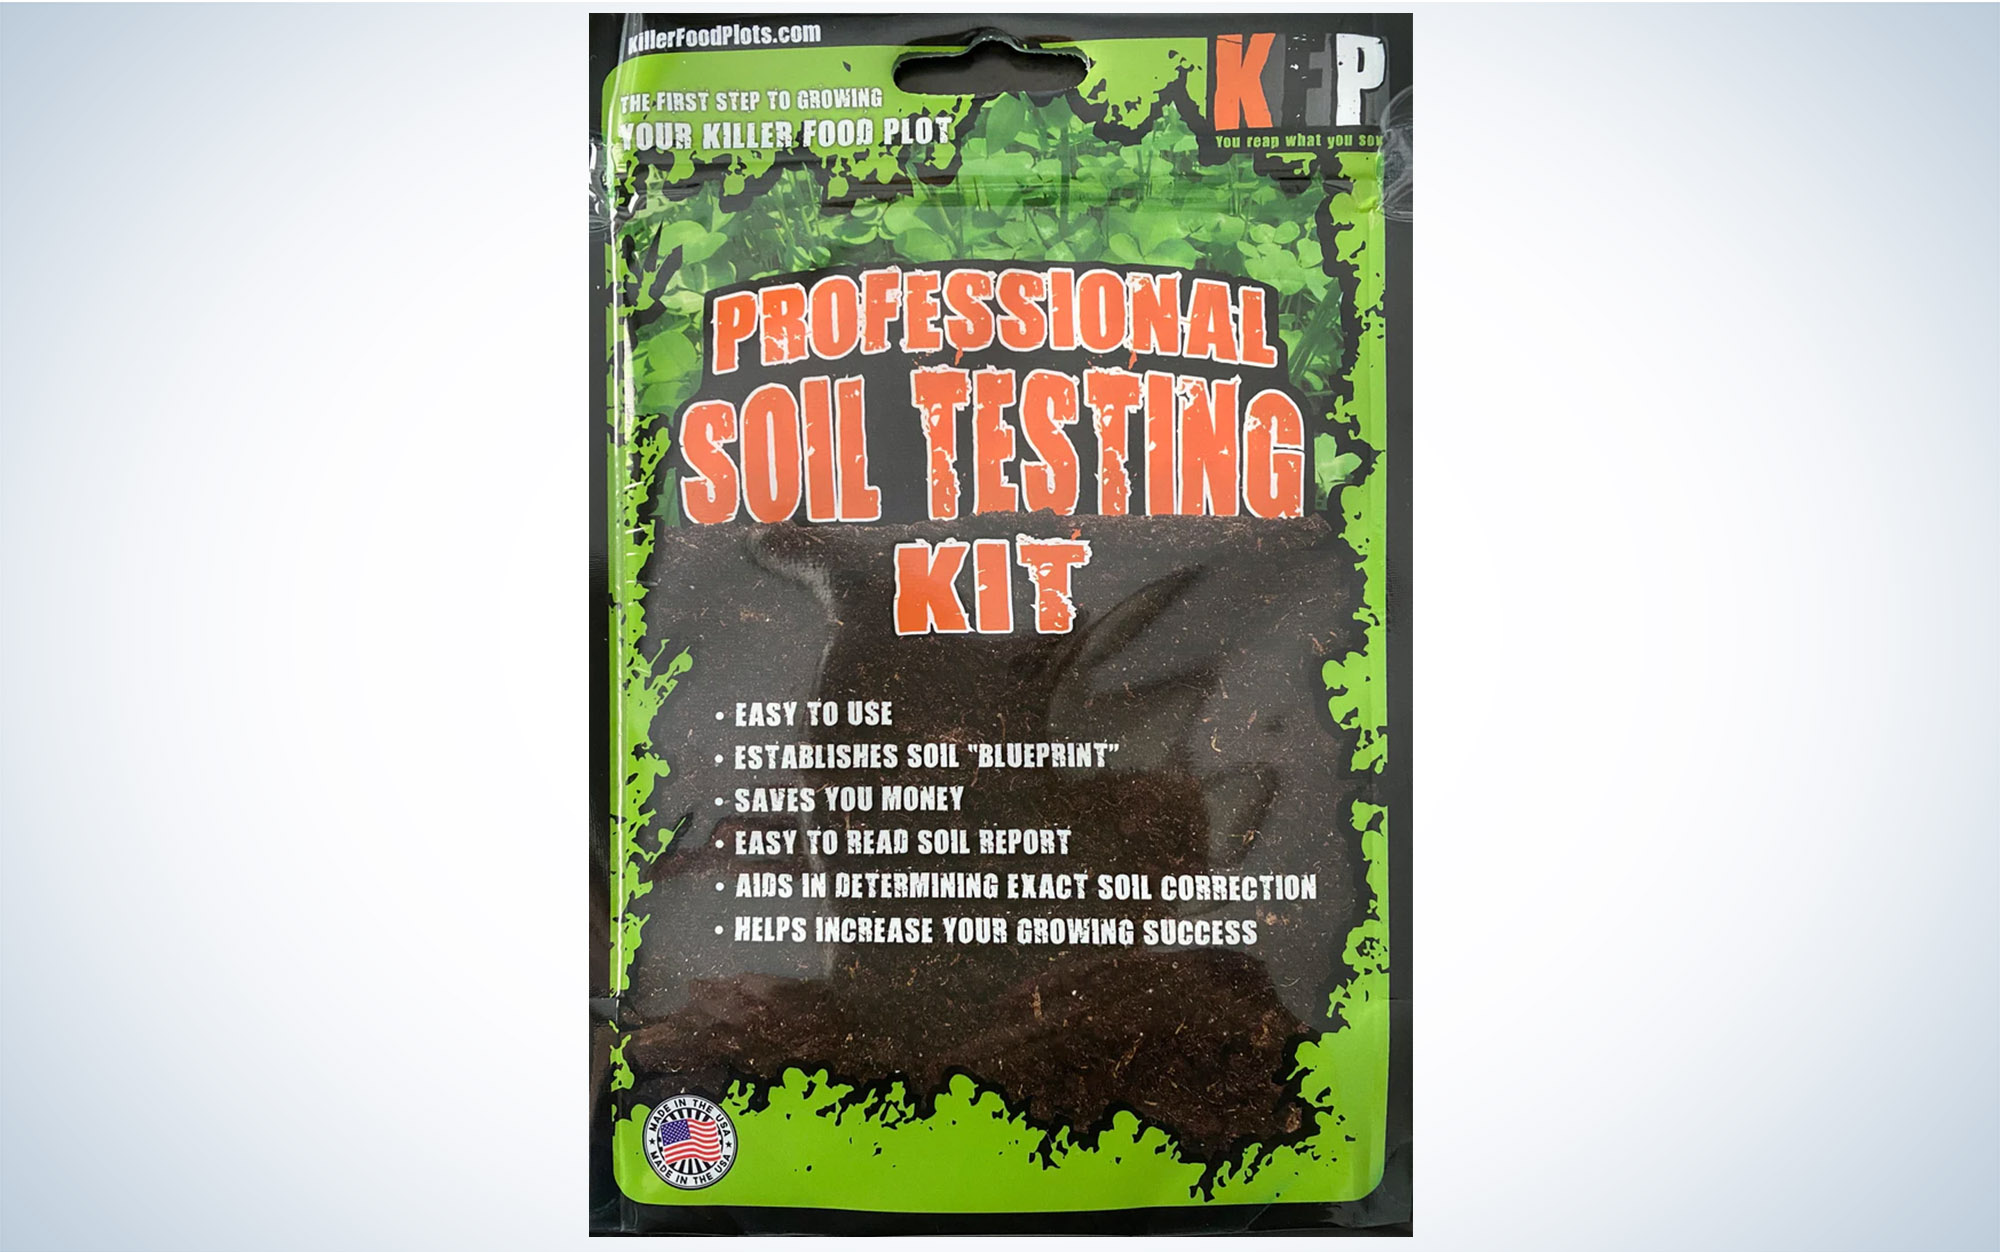 The Killer Food Plots Professional Soil Testing Kit is one of the best soil test kits.